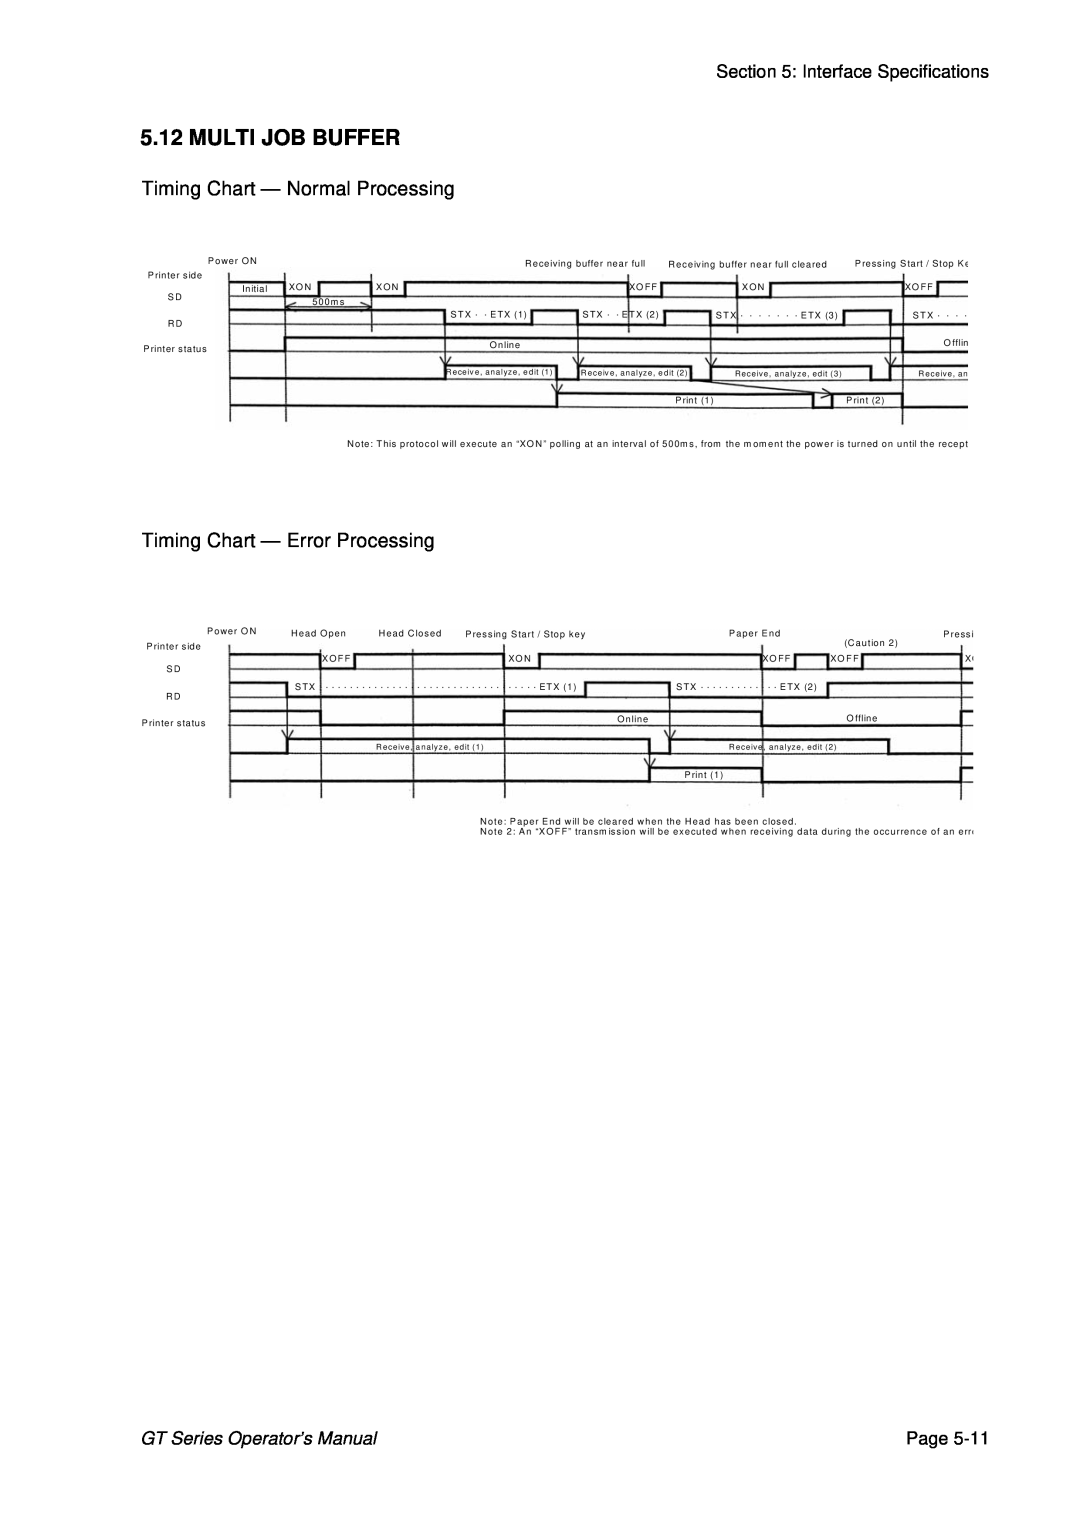 SATO GT424 manual Multi Job Buffer, Timing Chart - Normal Processing, Timing Chart - Error Processing, Page 